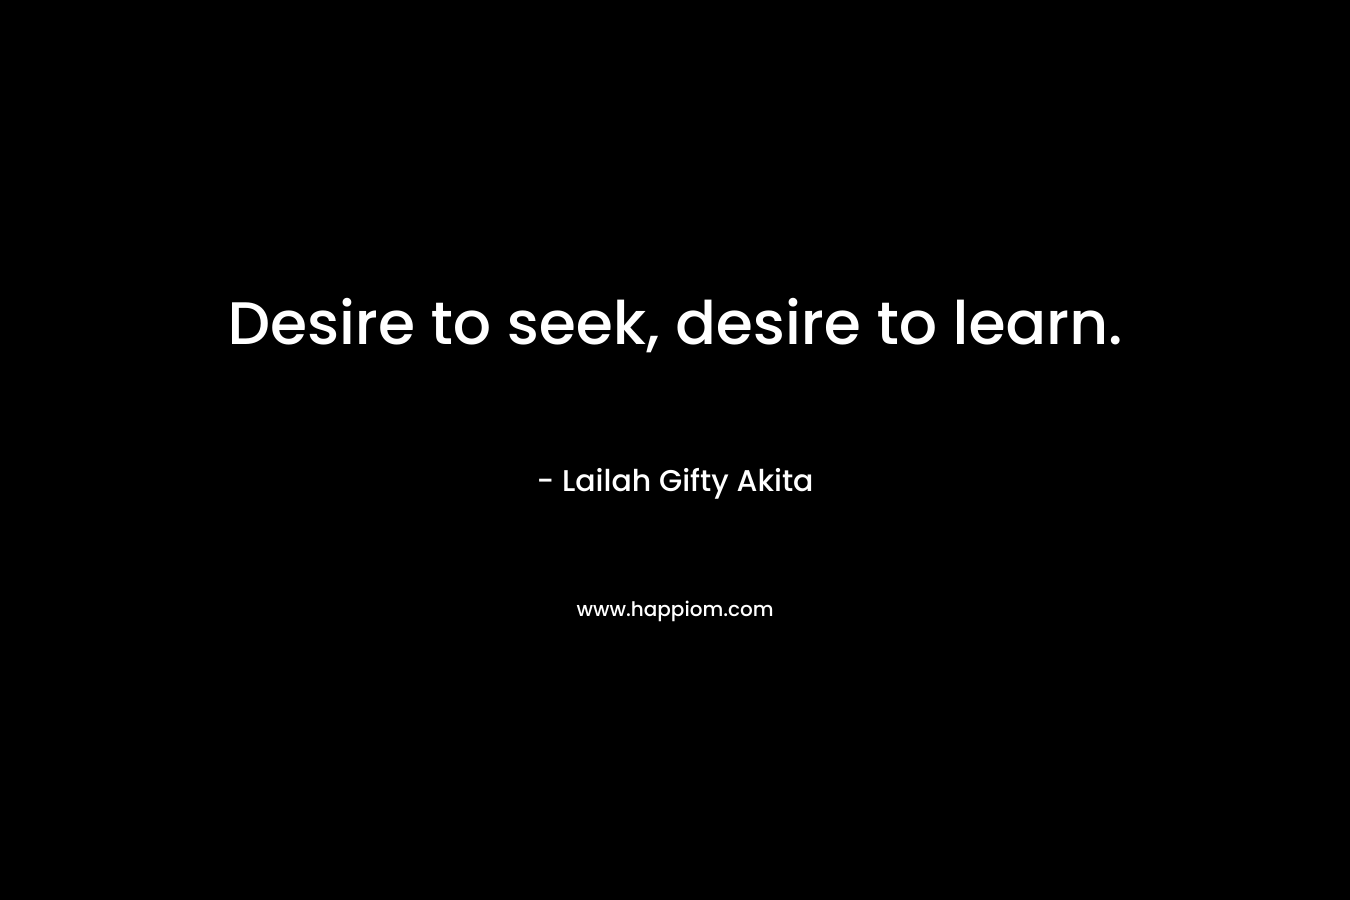 Desire to seek, desire to learn.